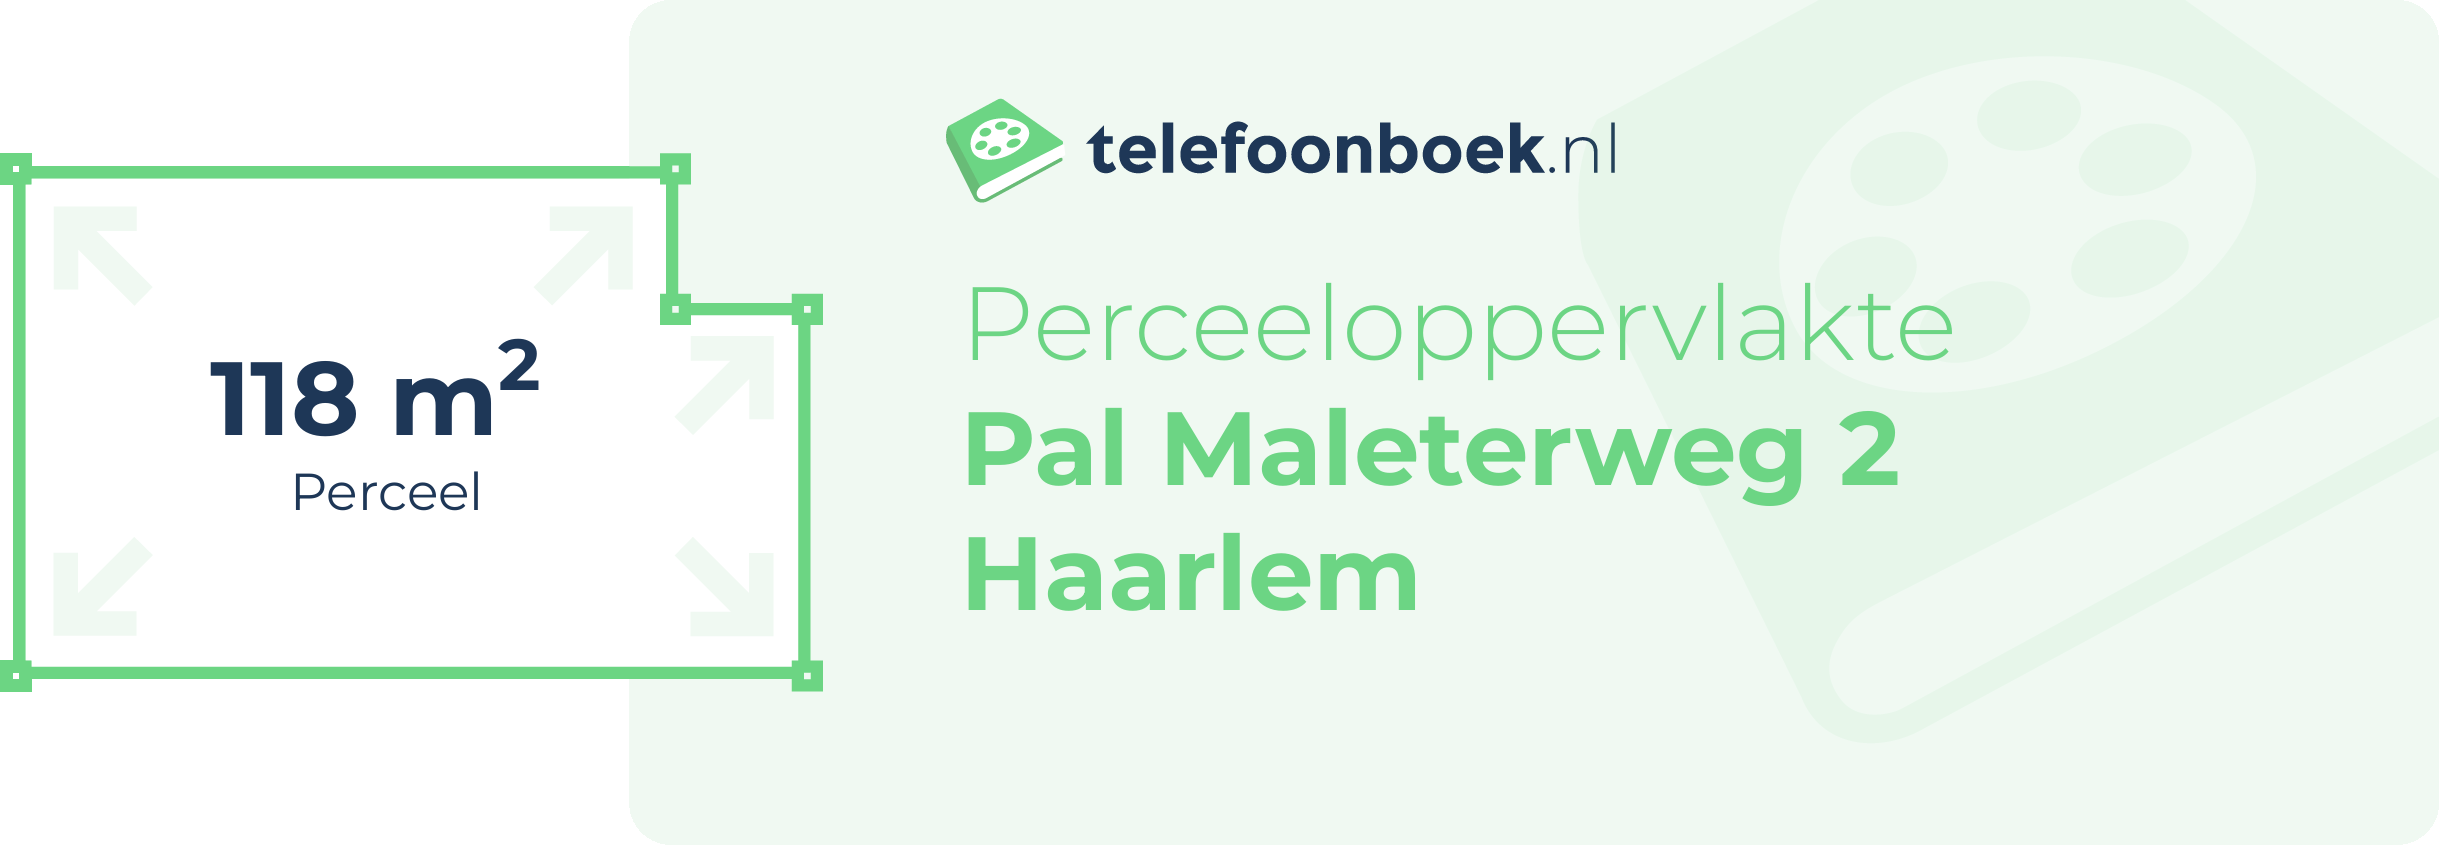 Perceeloppervlakte Pal Maleterweg 2 Haarlem